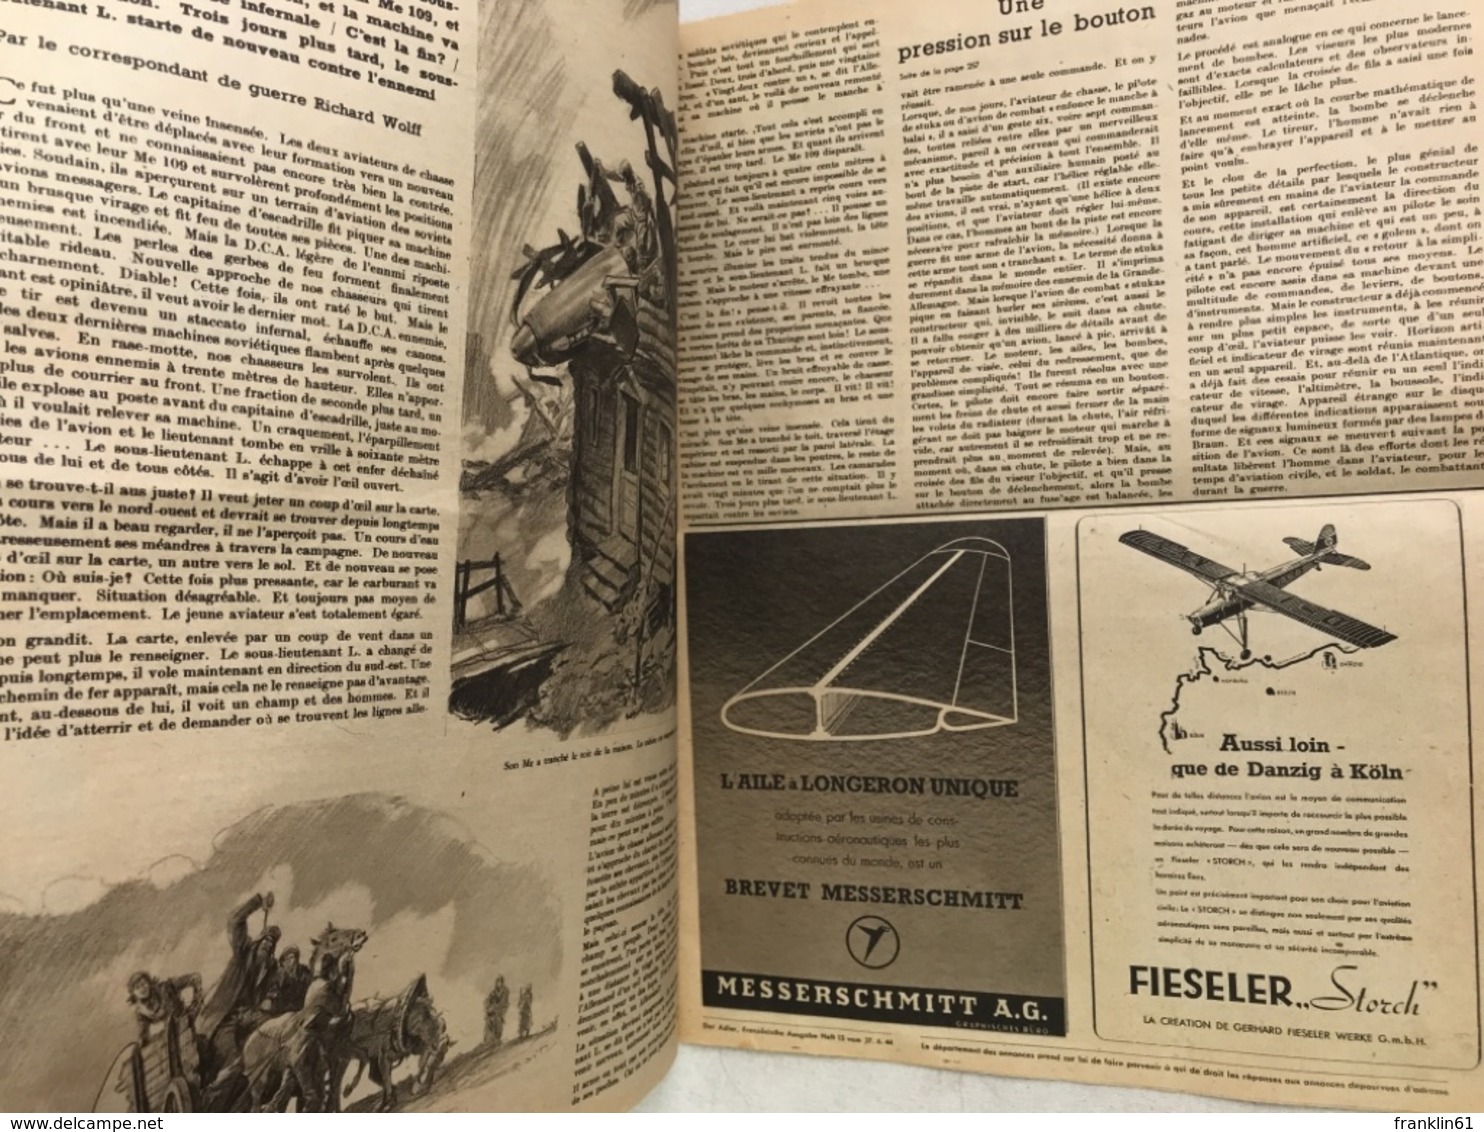 Der Adler - Edition francaise. Numero 13, 27.Juin 1944.